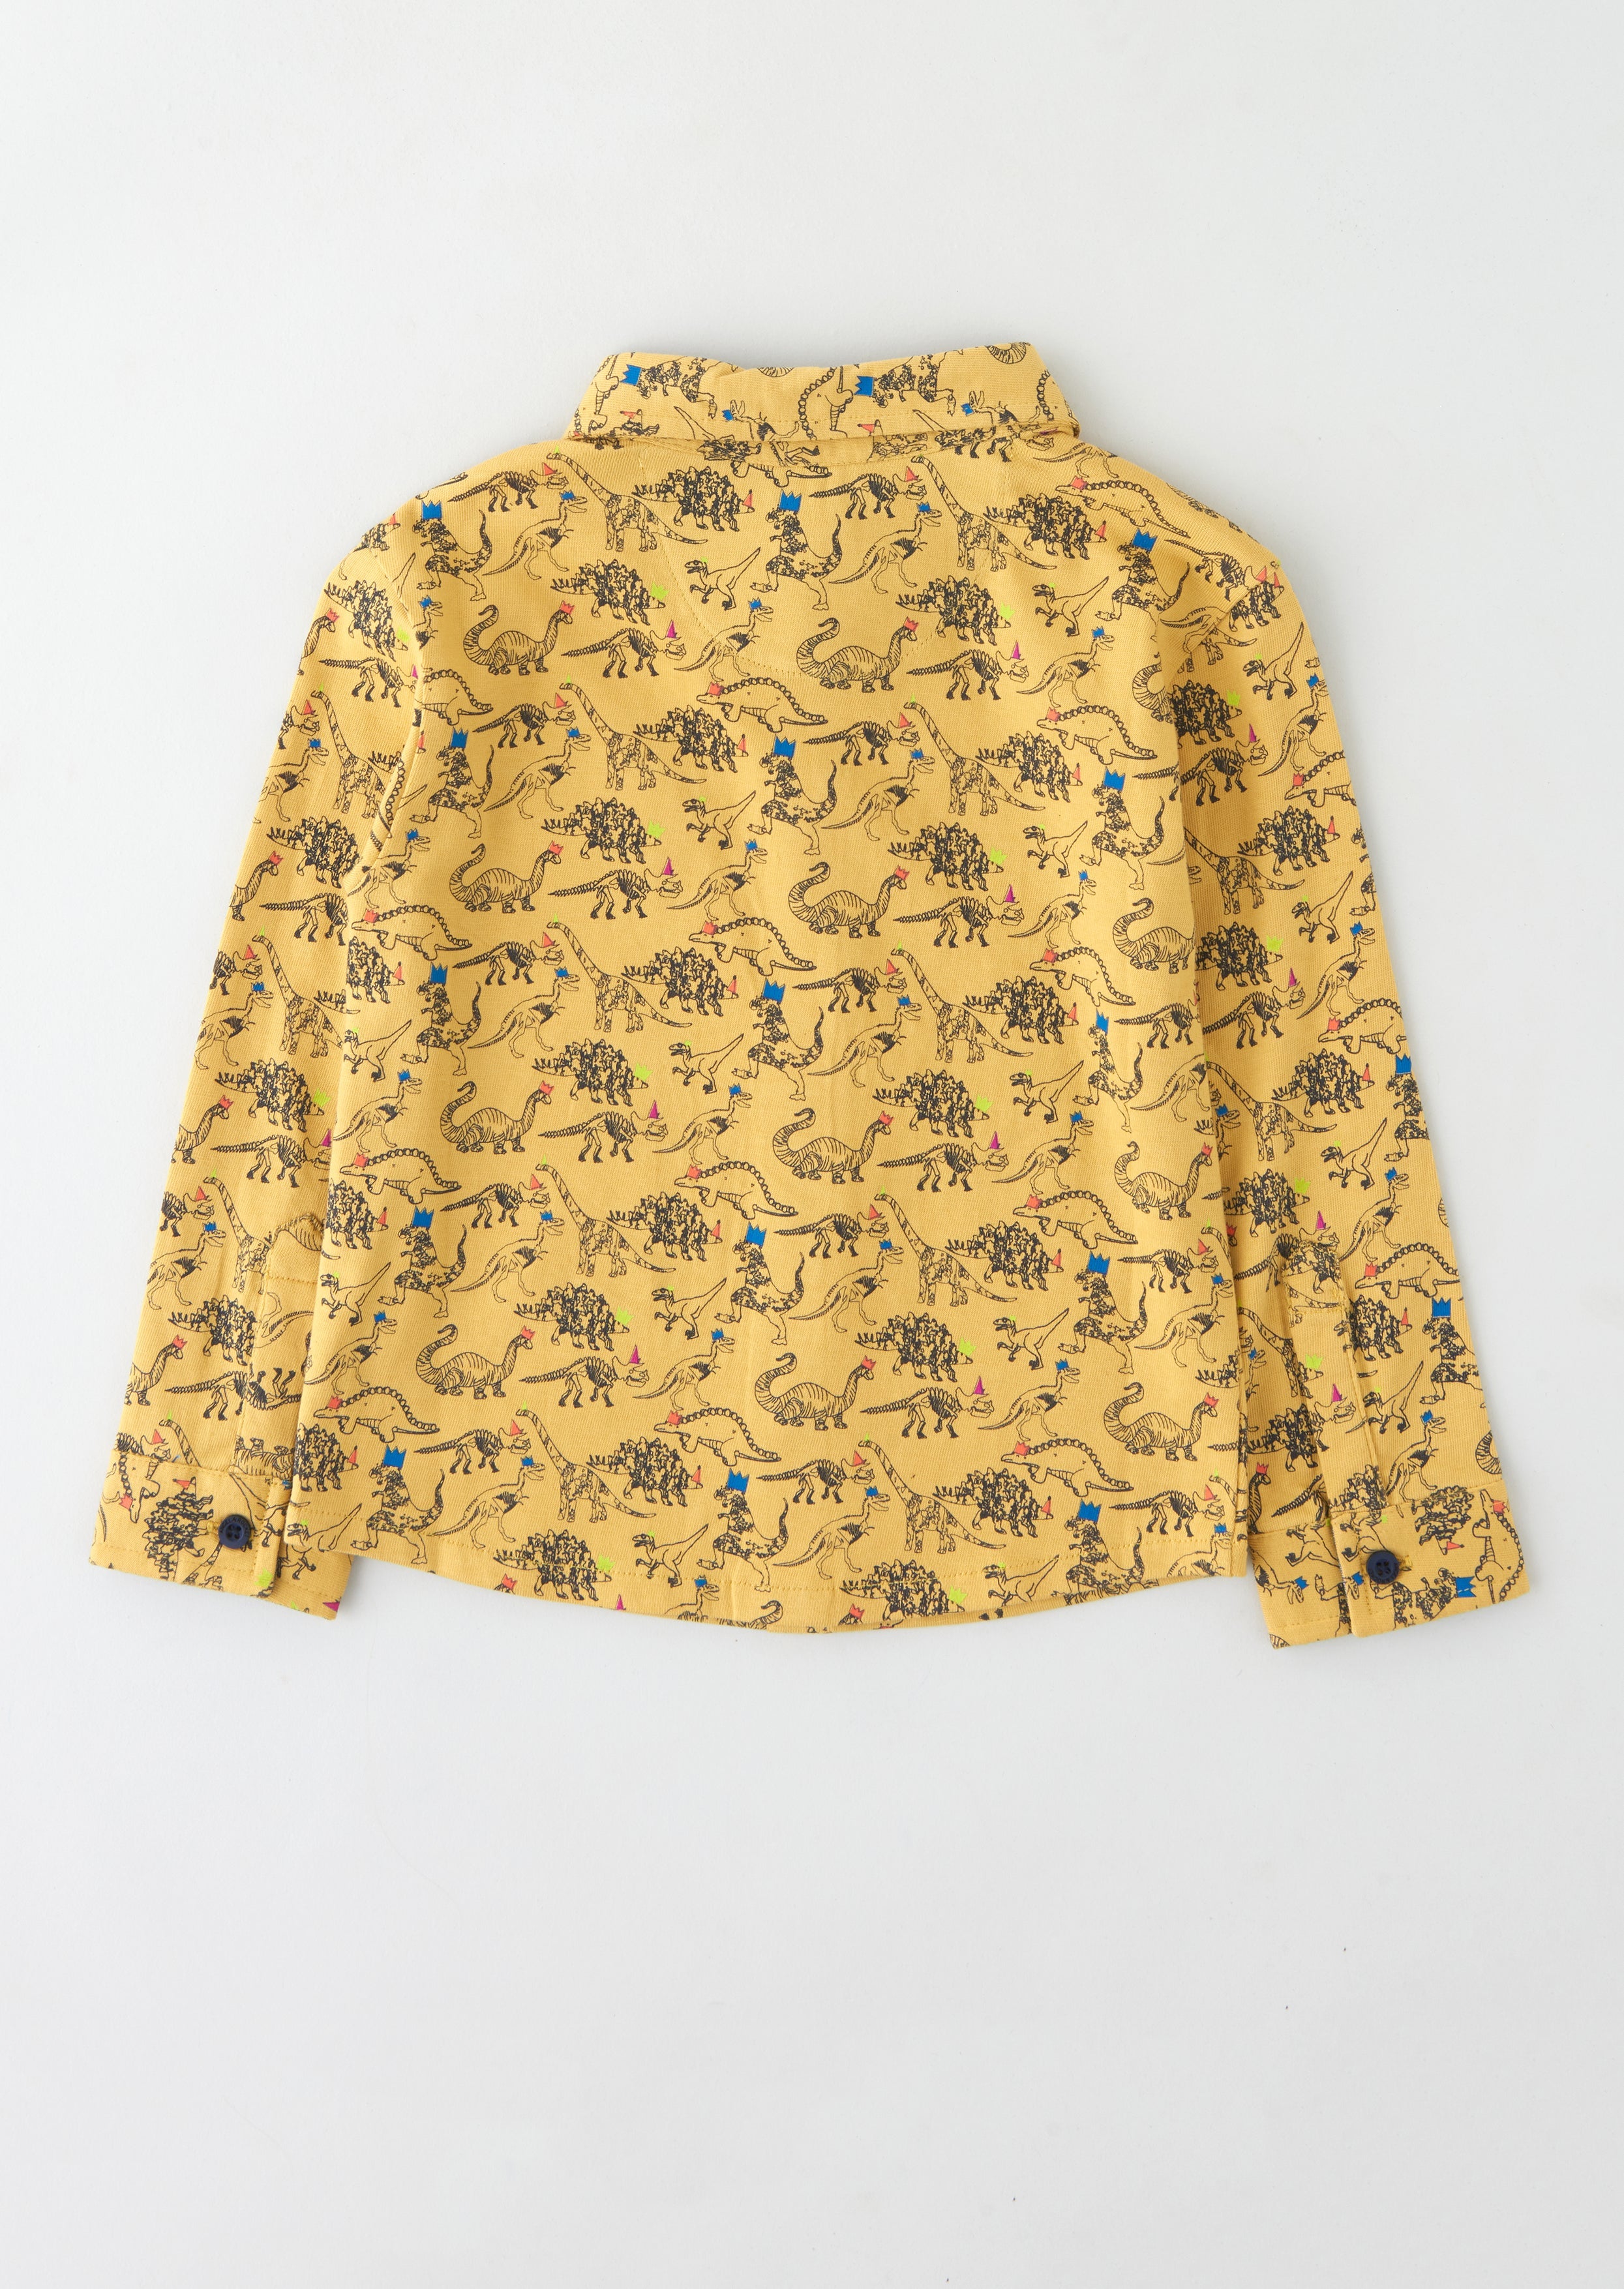 Baby Boy Dinosaur Printed Full Sleeves Yellow Shirt